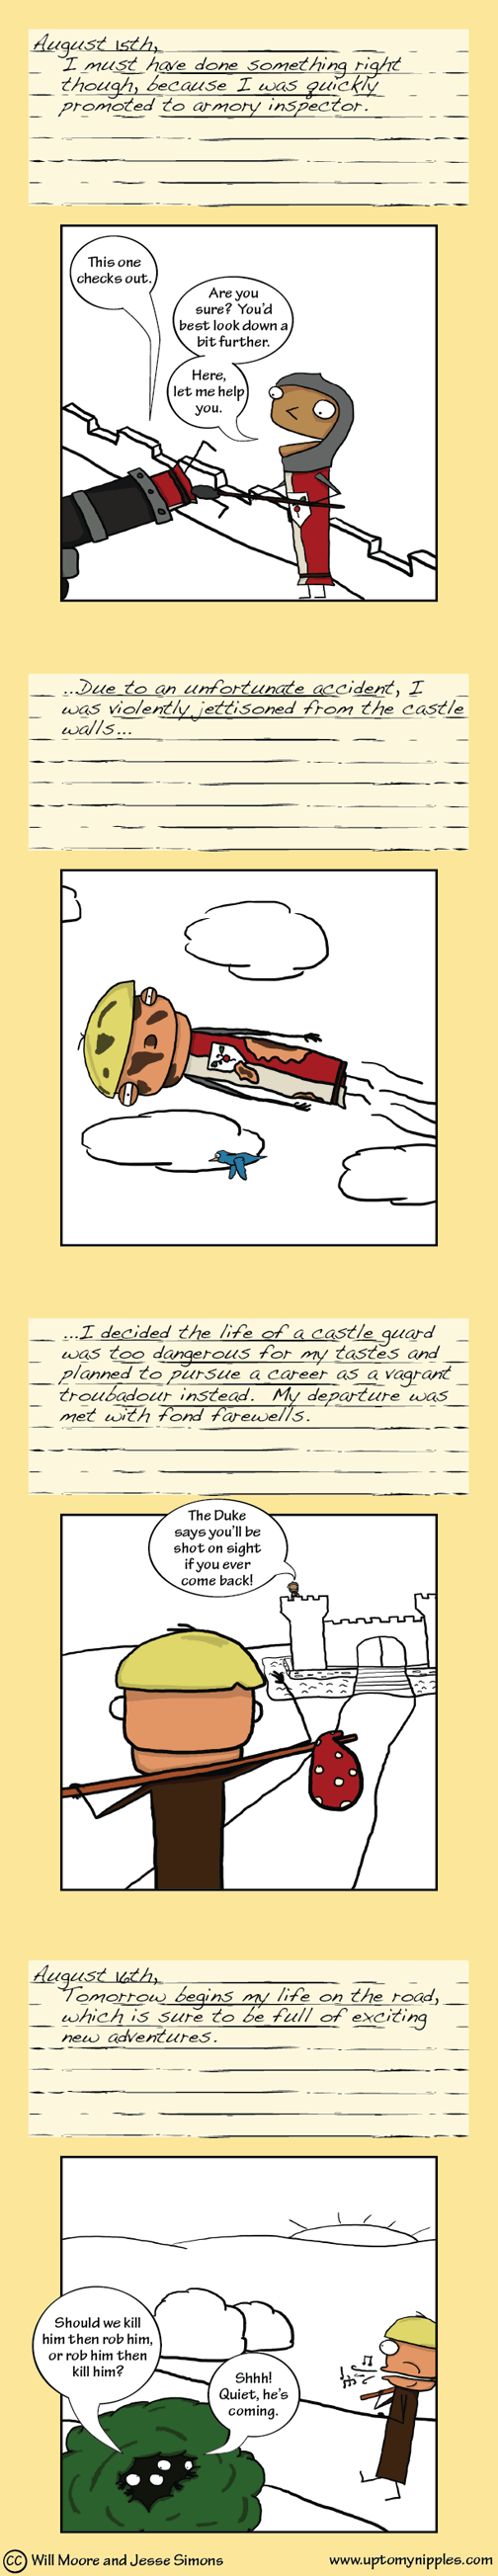 Diary of a Castle Guard (3/3) comic